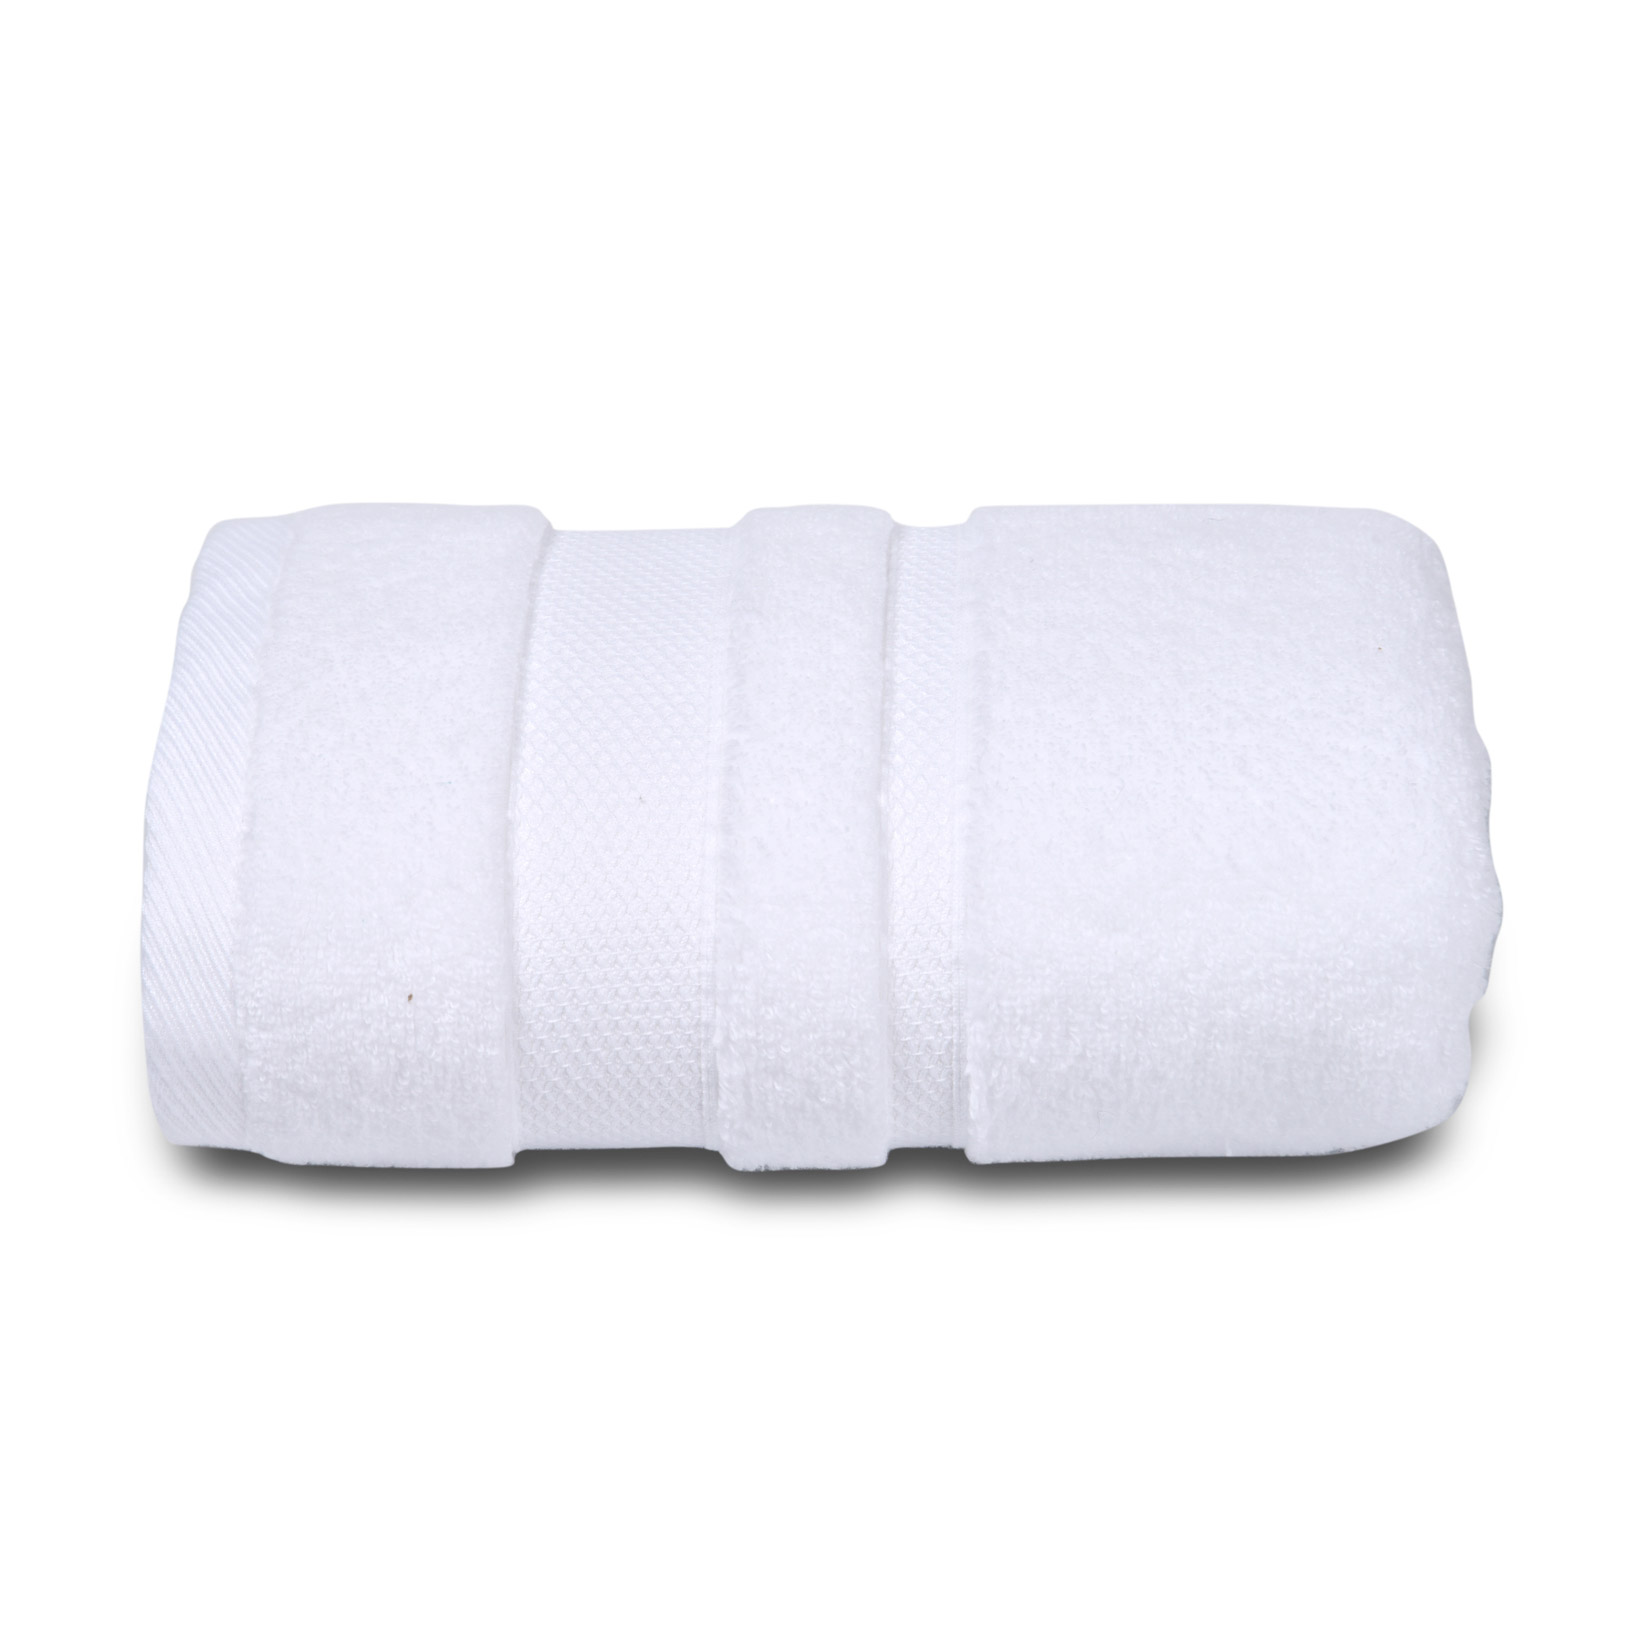 Полотенце махровое Cleanelly perfetto твист 50х100 белый полотенце eumenia 50x100 см серое